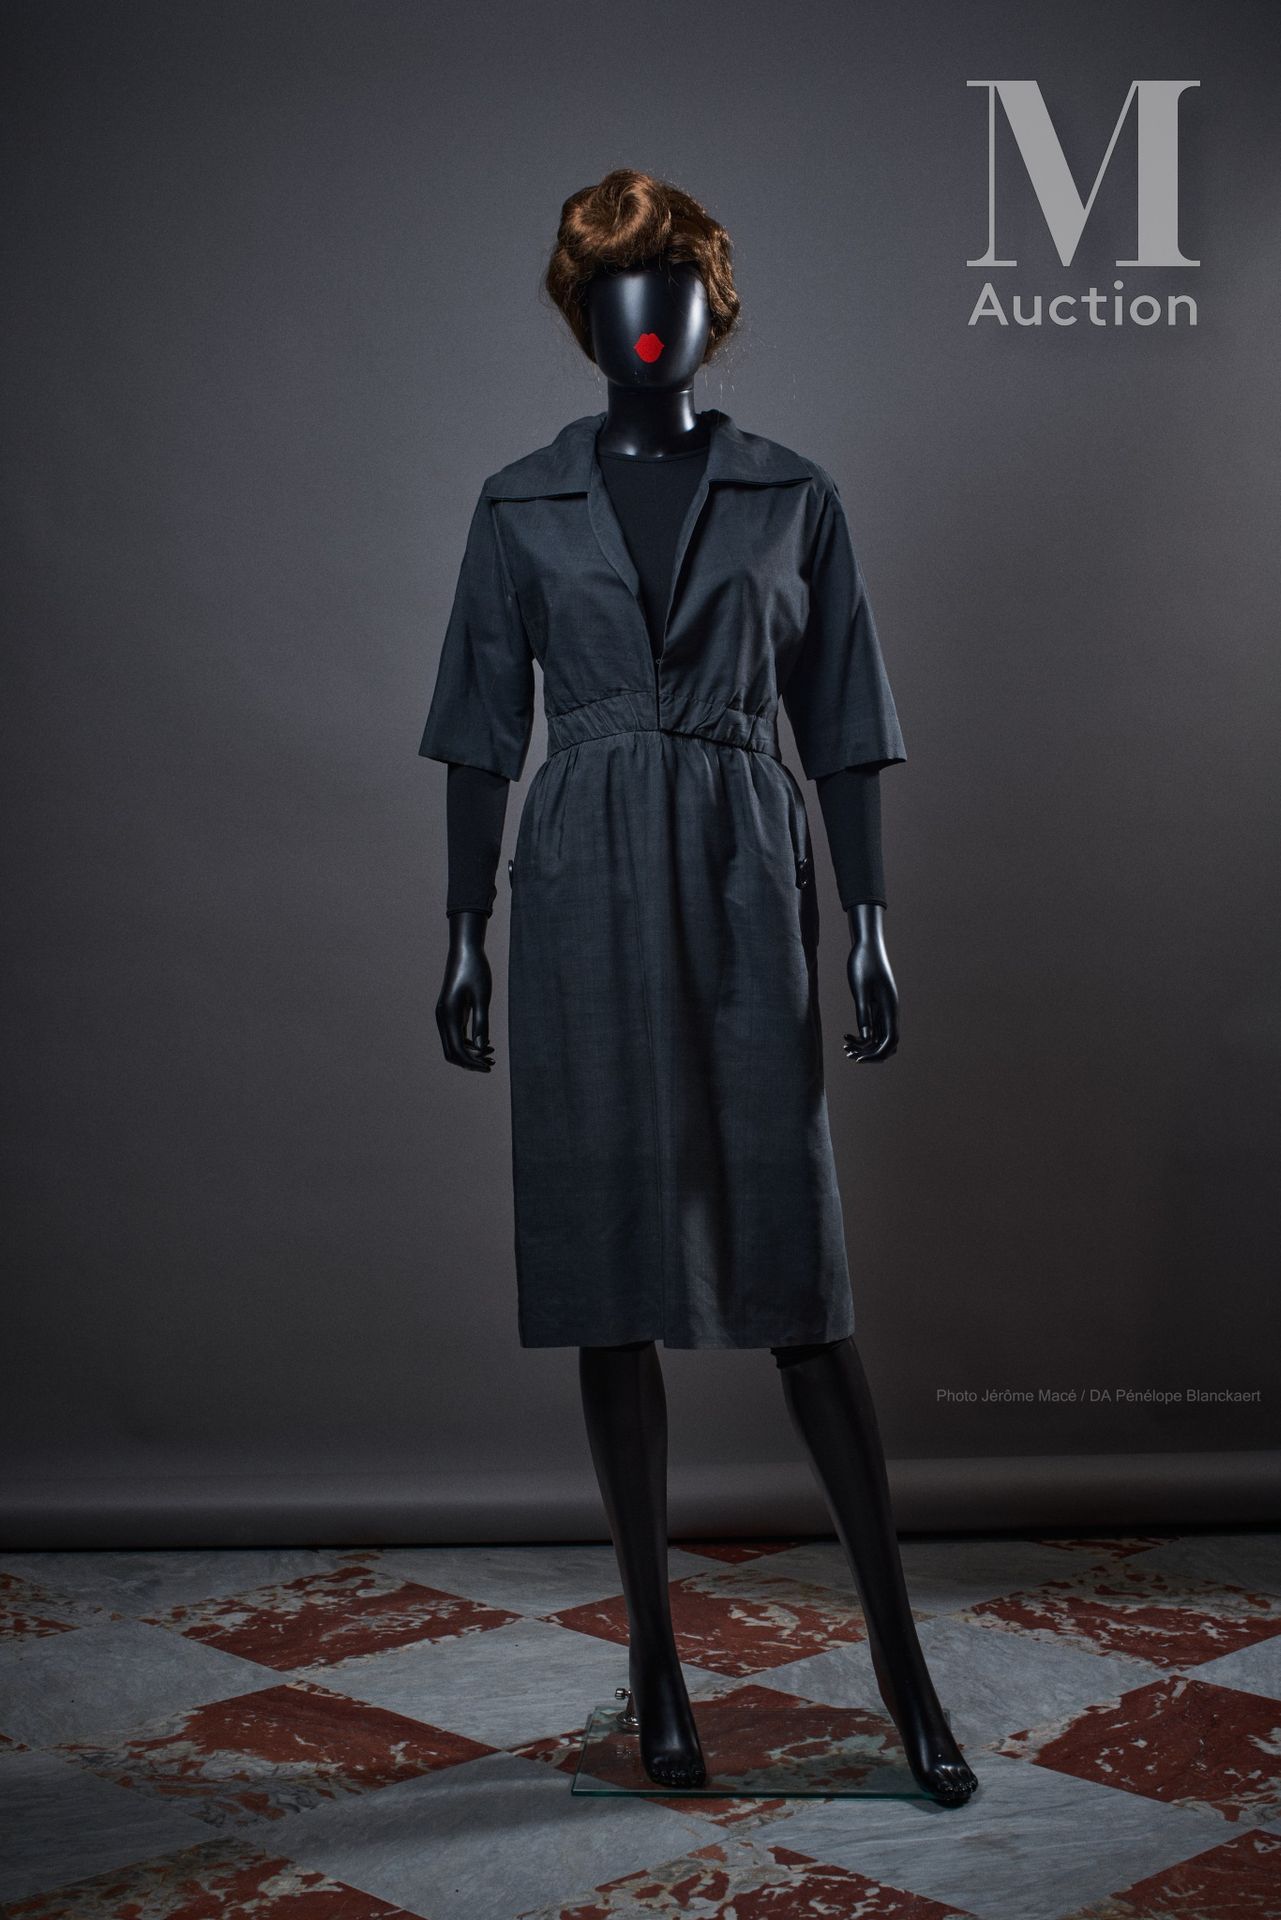 JEANNE LANVIN (HAUTE COUTURE N°73039) - 1950'S Vestido de tarde

en shantung de &hellip;